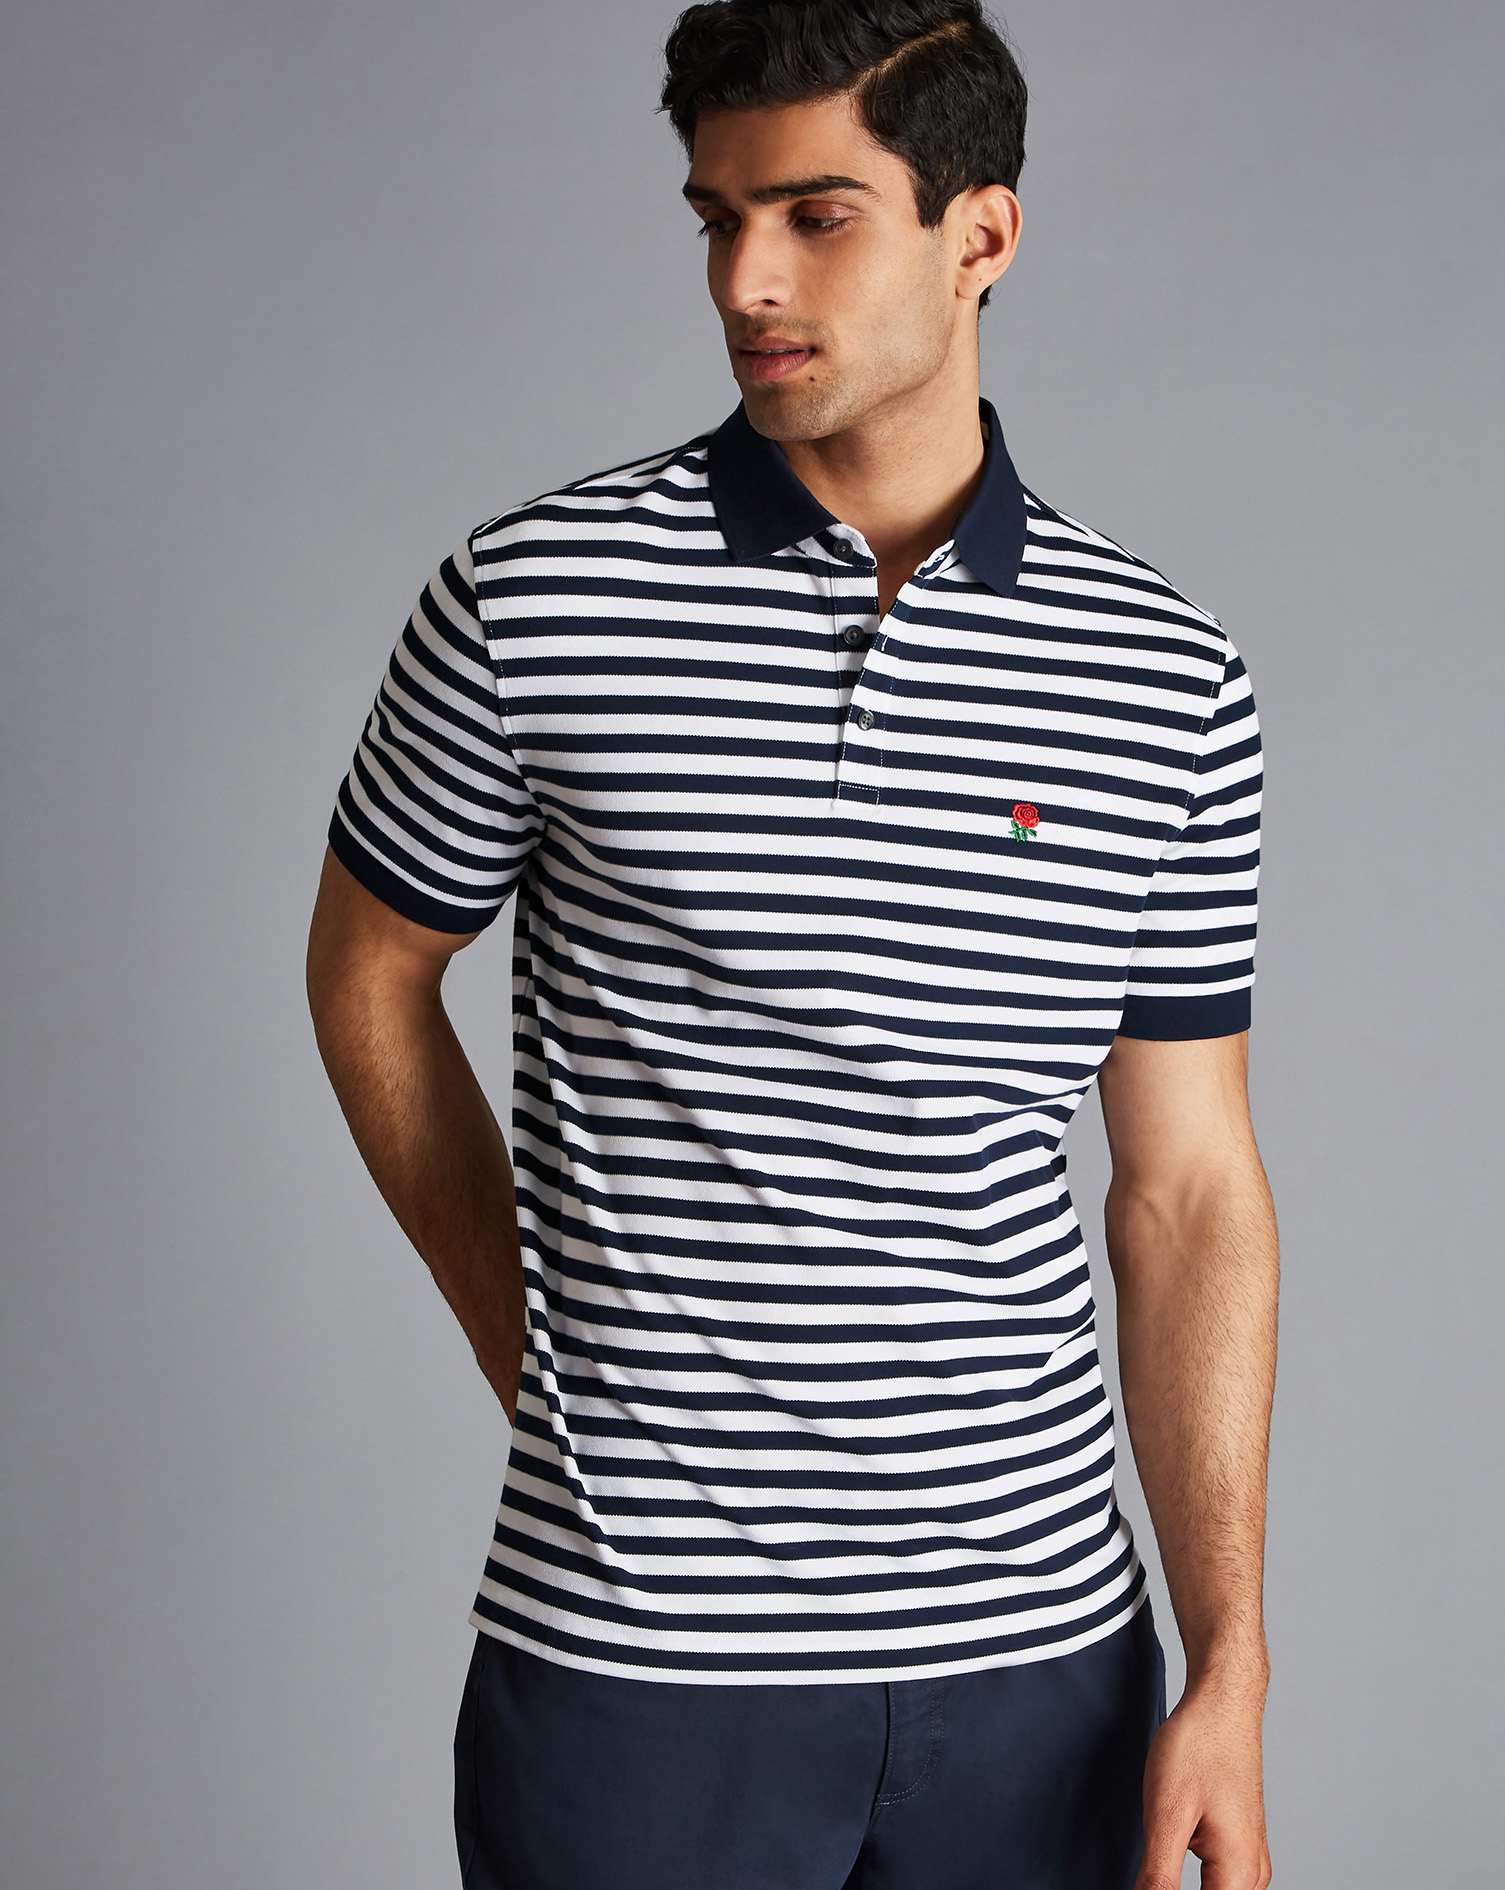 Men's Charles Tyrwhitt England Rugby Stripe Pique Polo Shirt - Navy & White Blue Size XL Cotton
